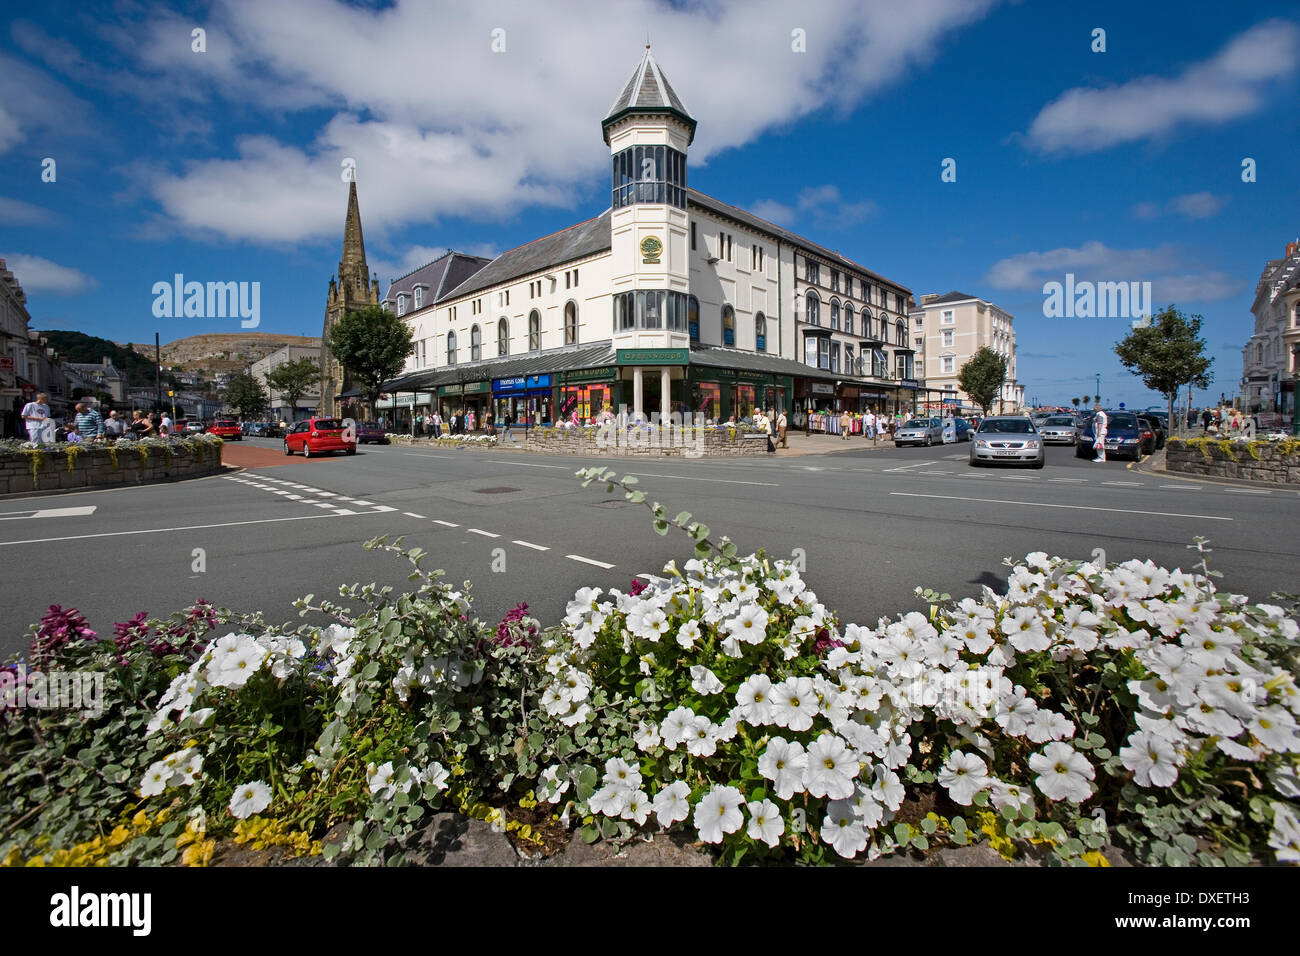 Die geschäftige Stadtzentrum Llandudno in Nord-Wales. Stockfoto